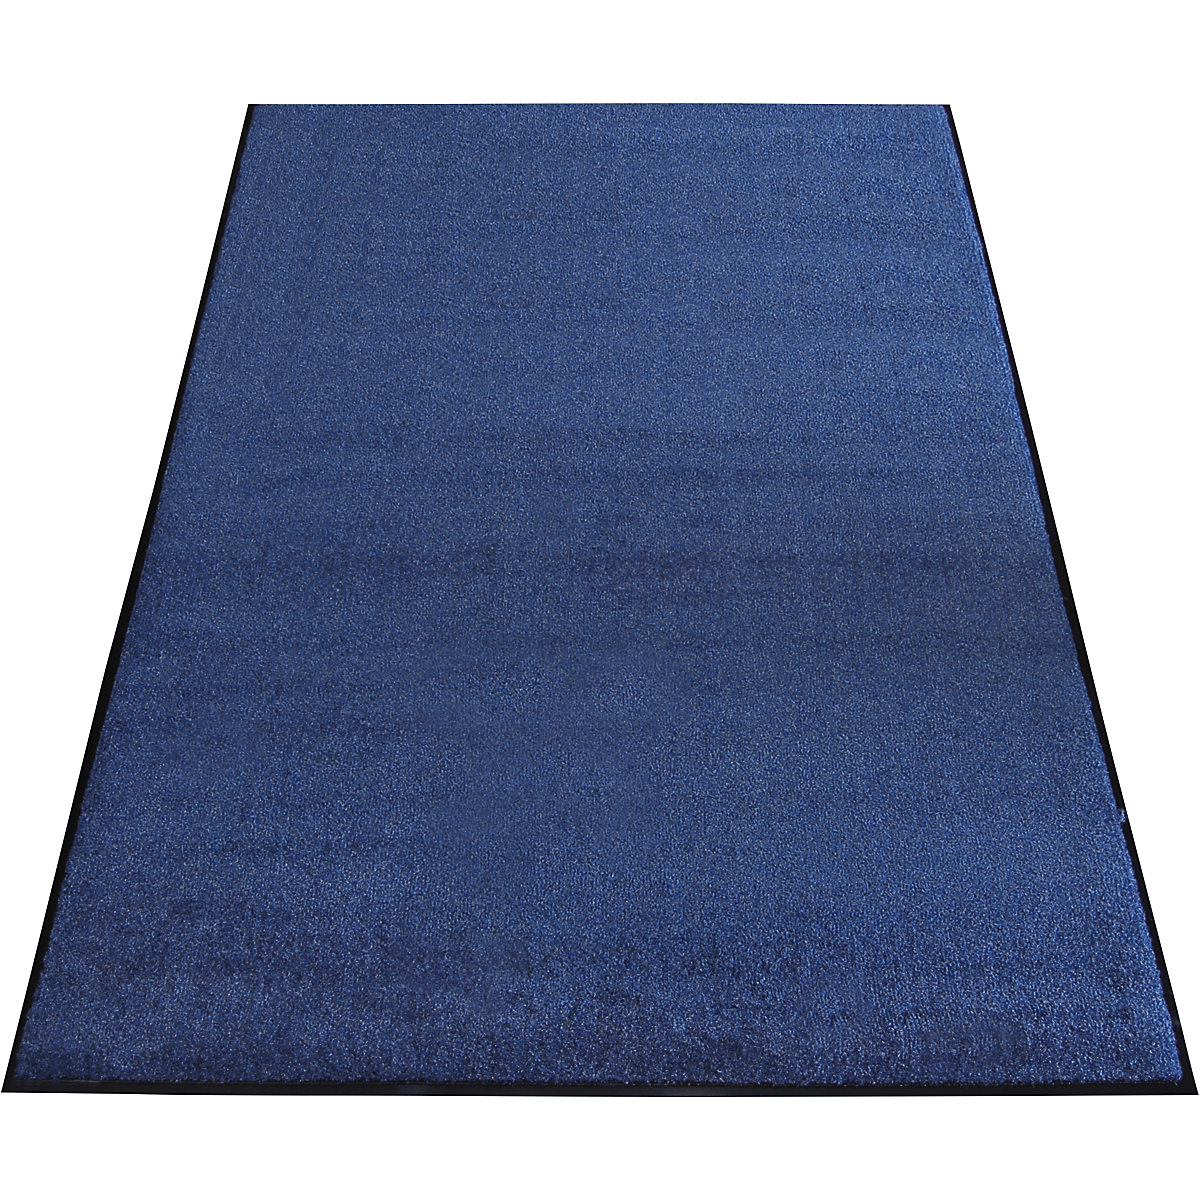 EAZYCARE AQUA entrance matting